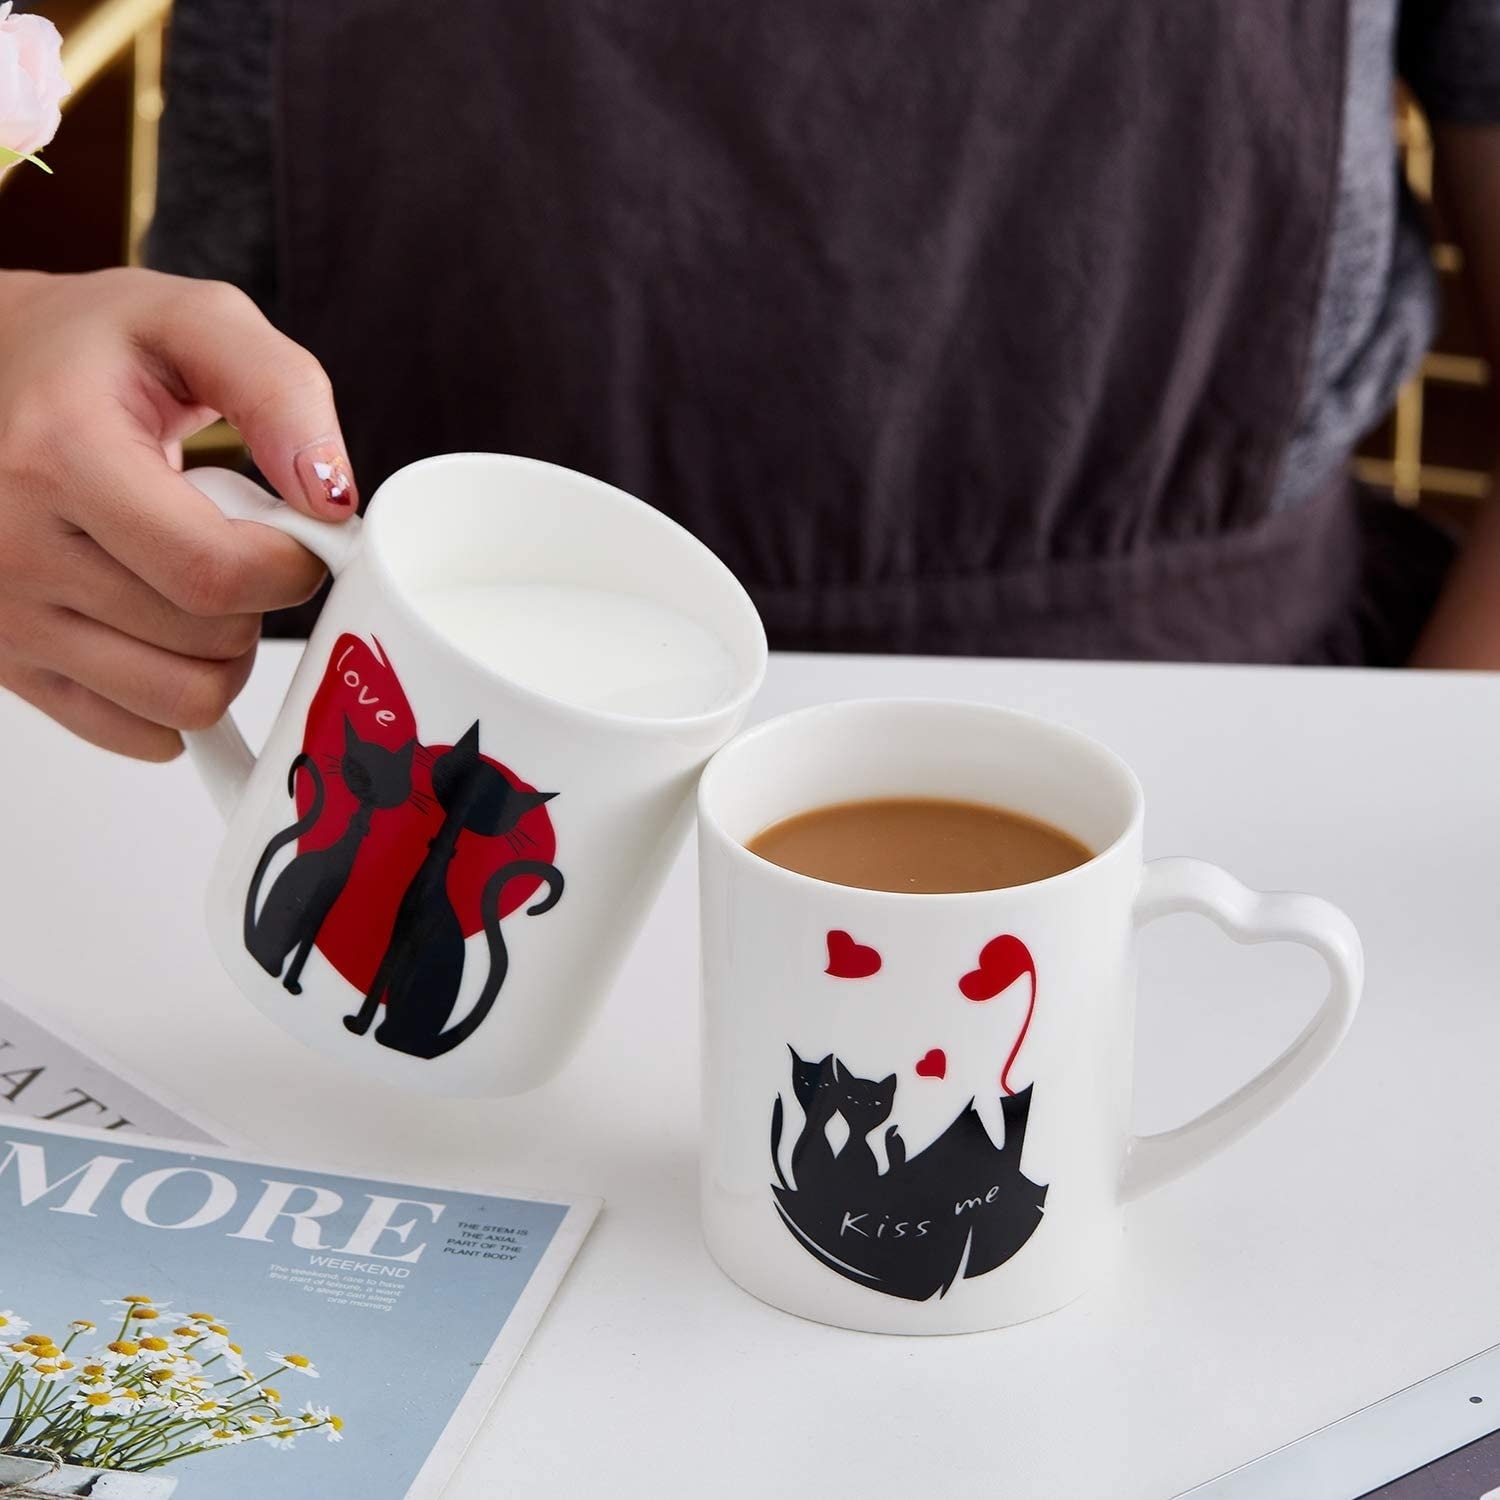 Bruntmor Ceramic Coffee Mugs Set of 4 Love Cats Romantic Mugs For Gift 12 Ounce